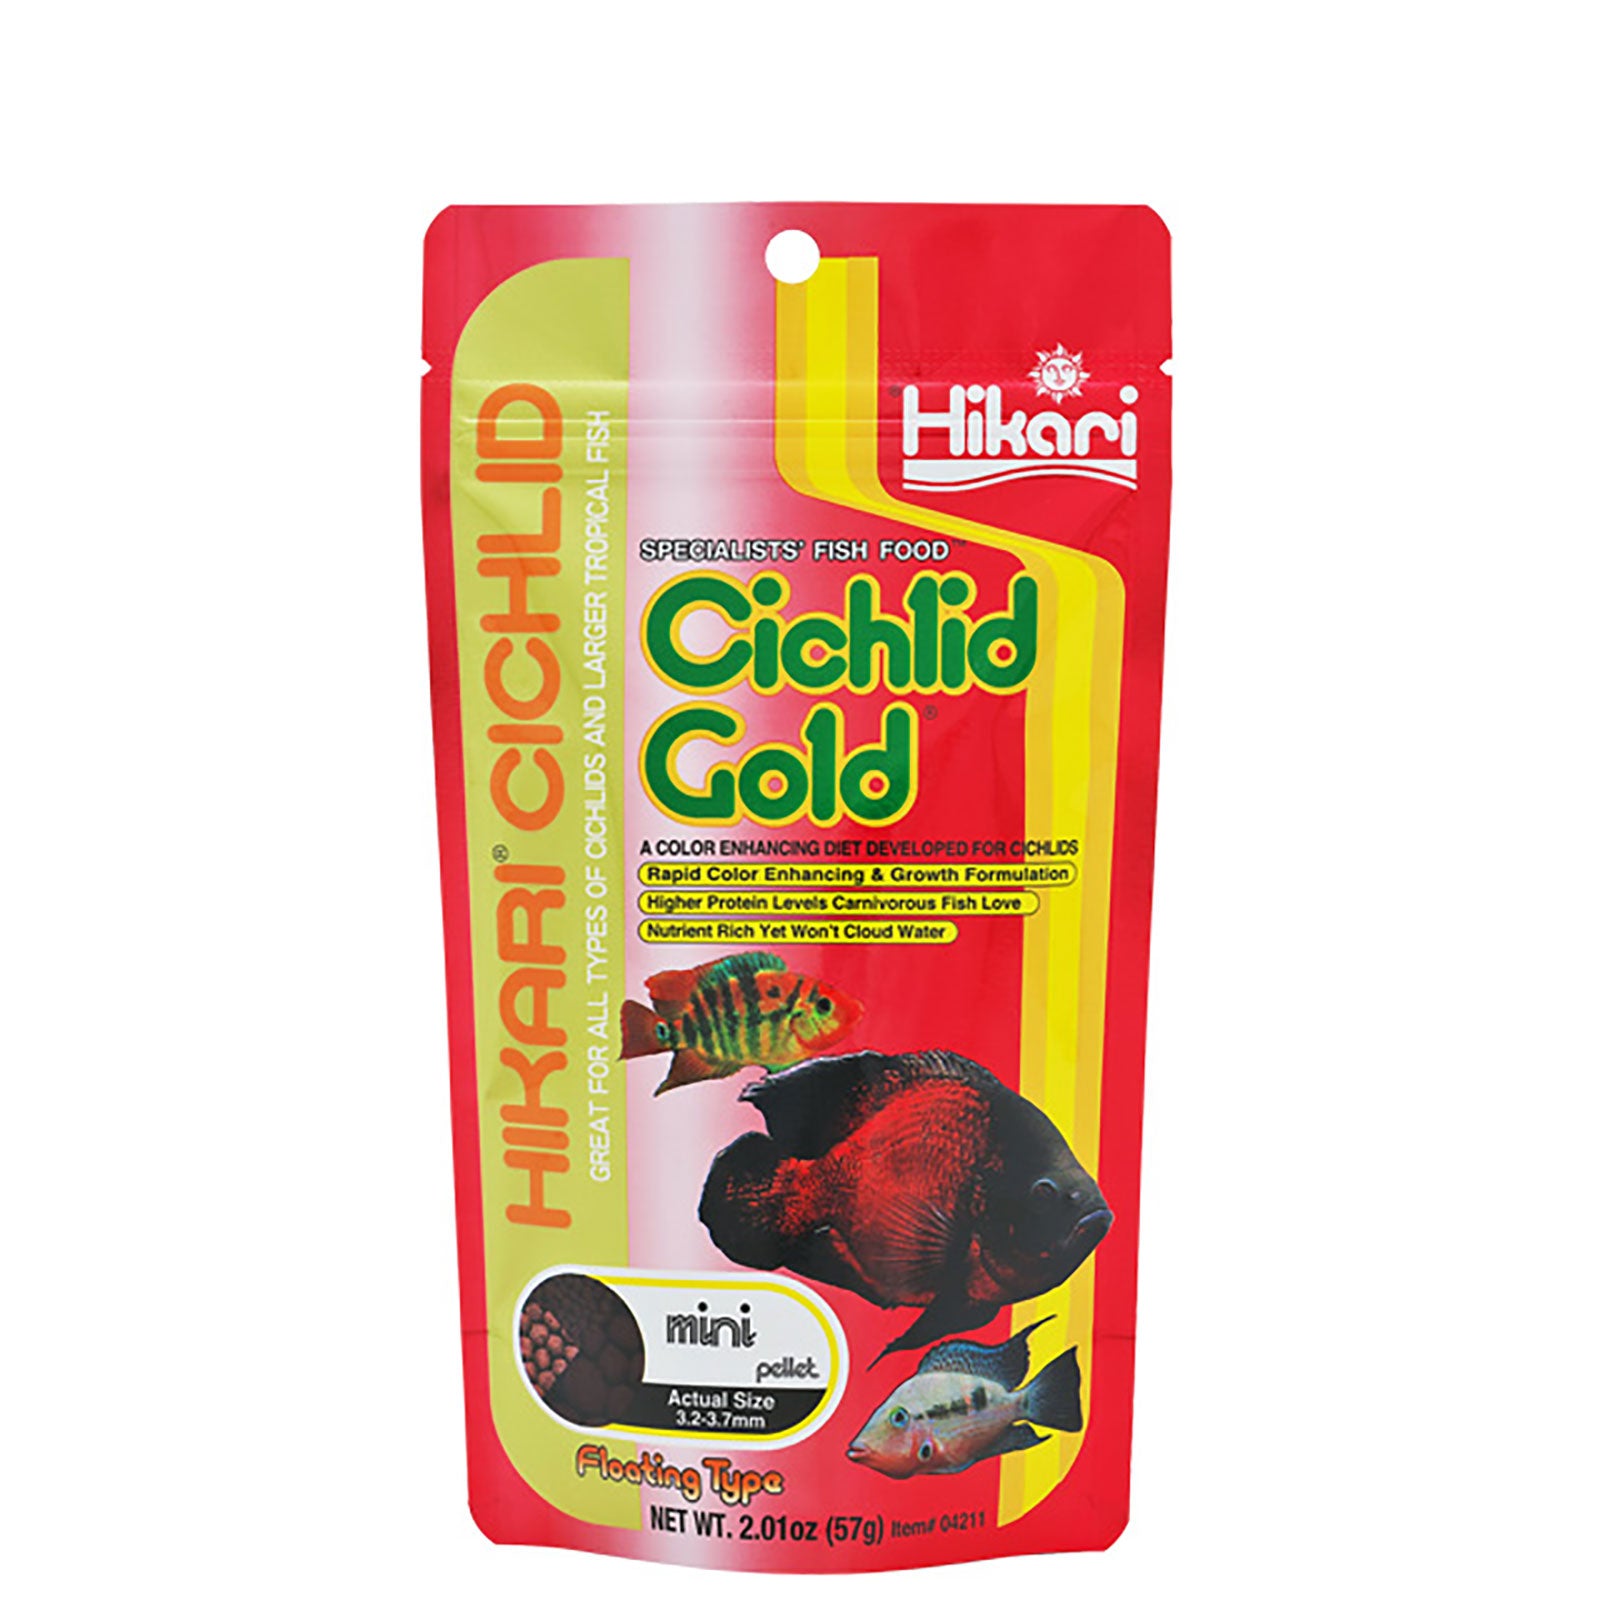 Hikari Cichlid Gold Pellet 250g